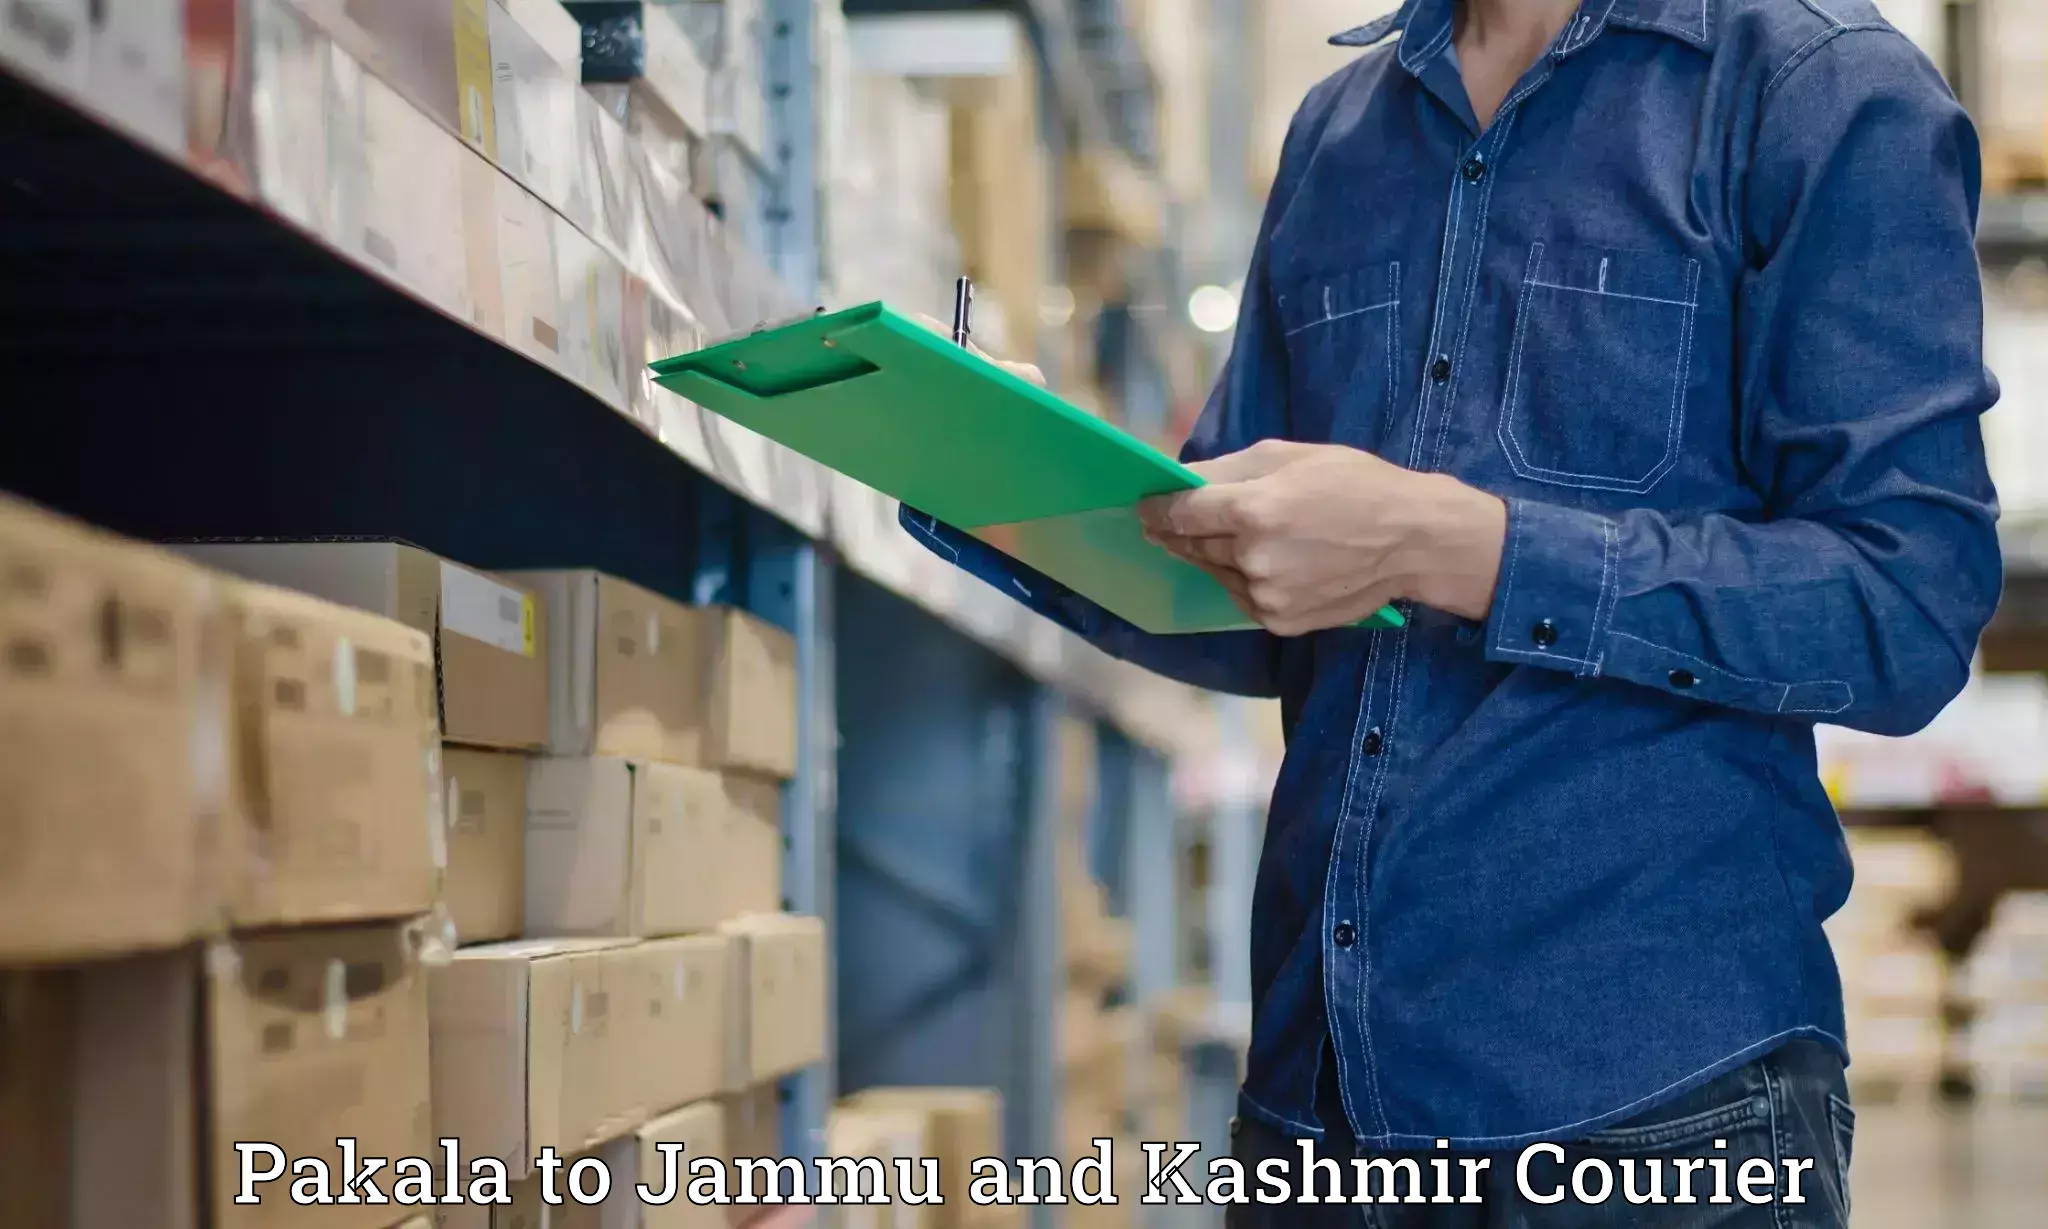 International courier networks Pakala to Jammu and Kashmir